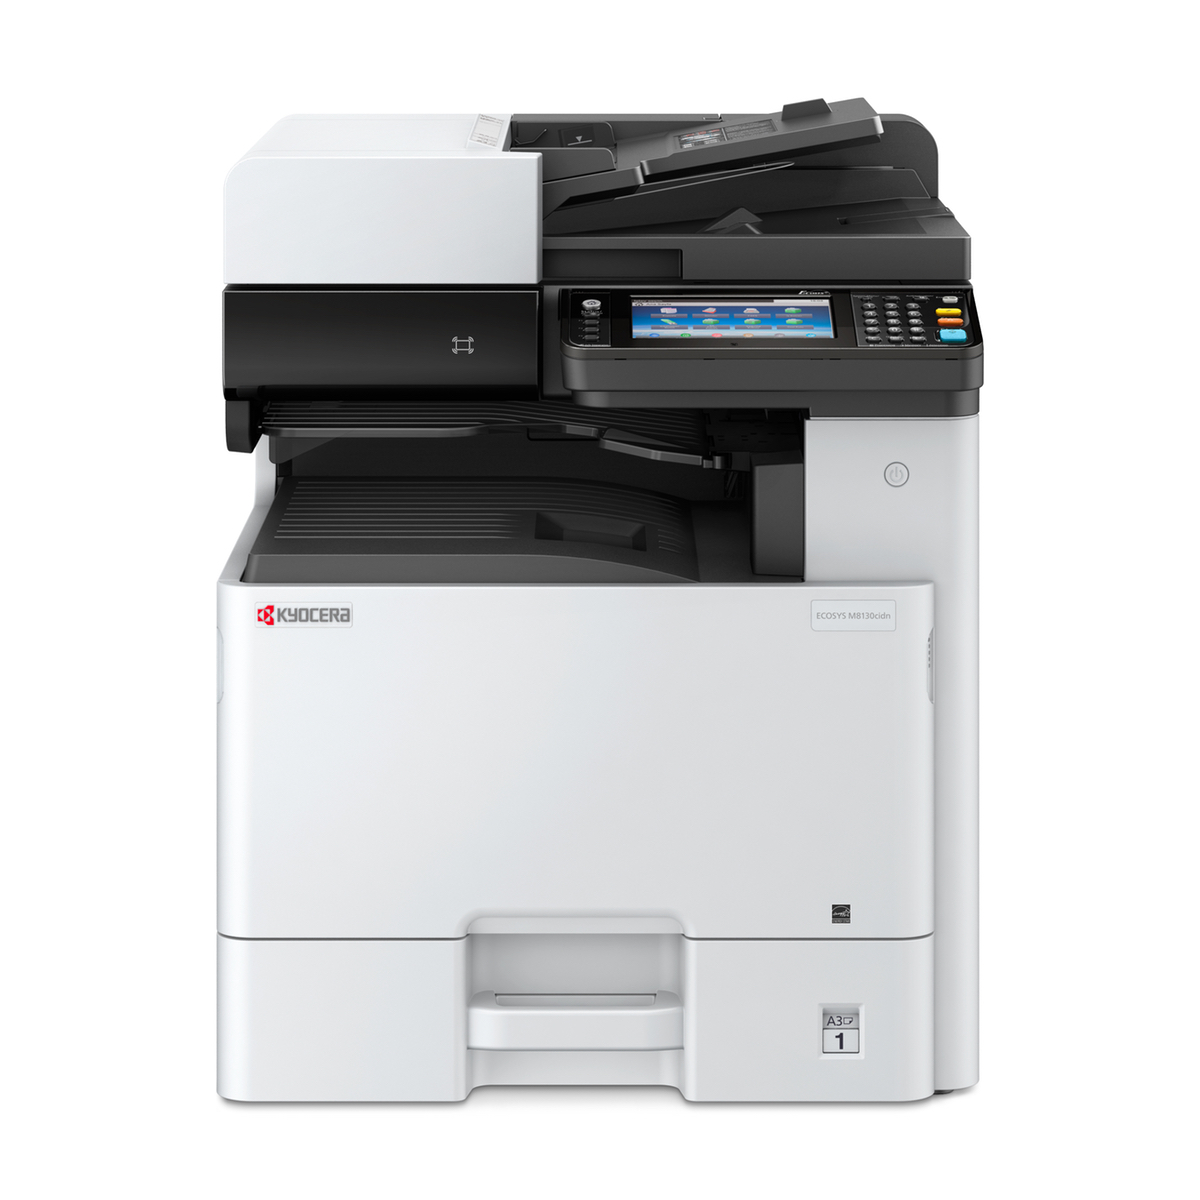 ECOSYS M8130cidn -- Kyocera Colour Multifunction Printer